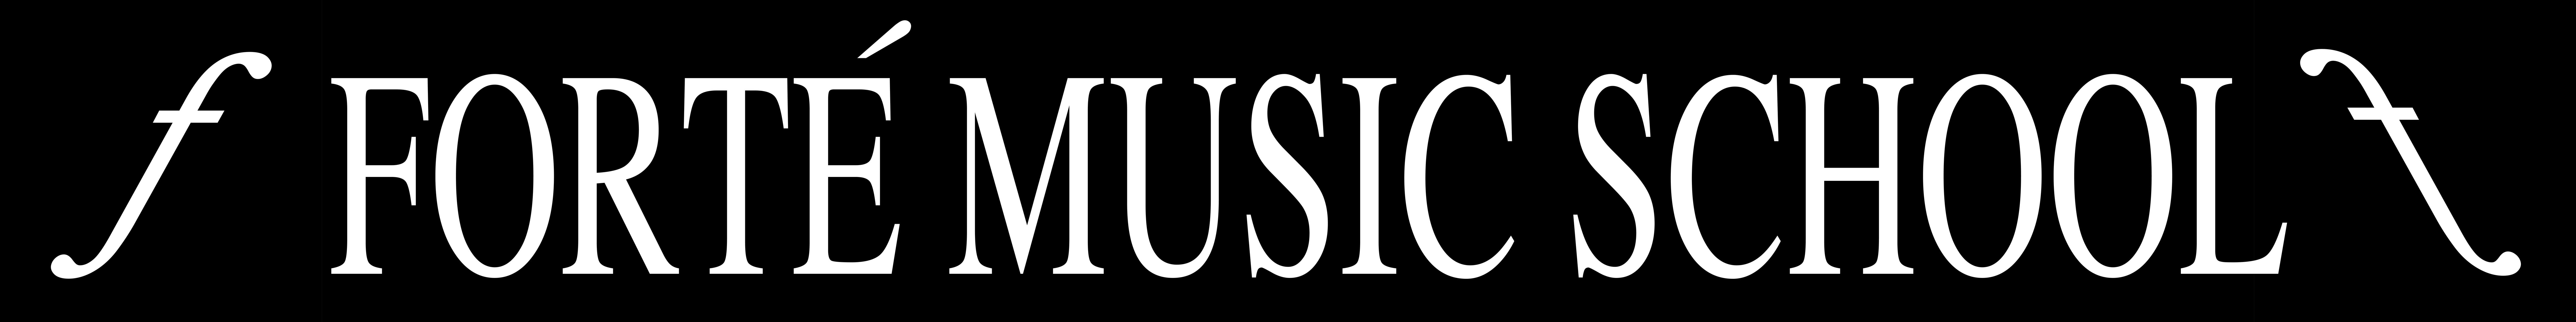 Forte Music School logo